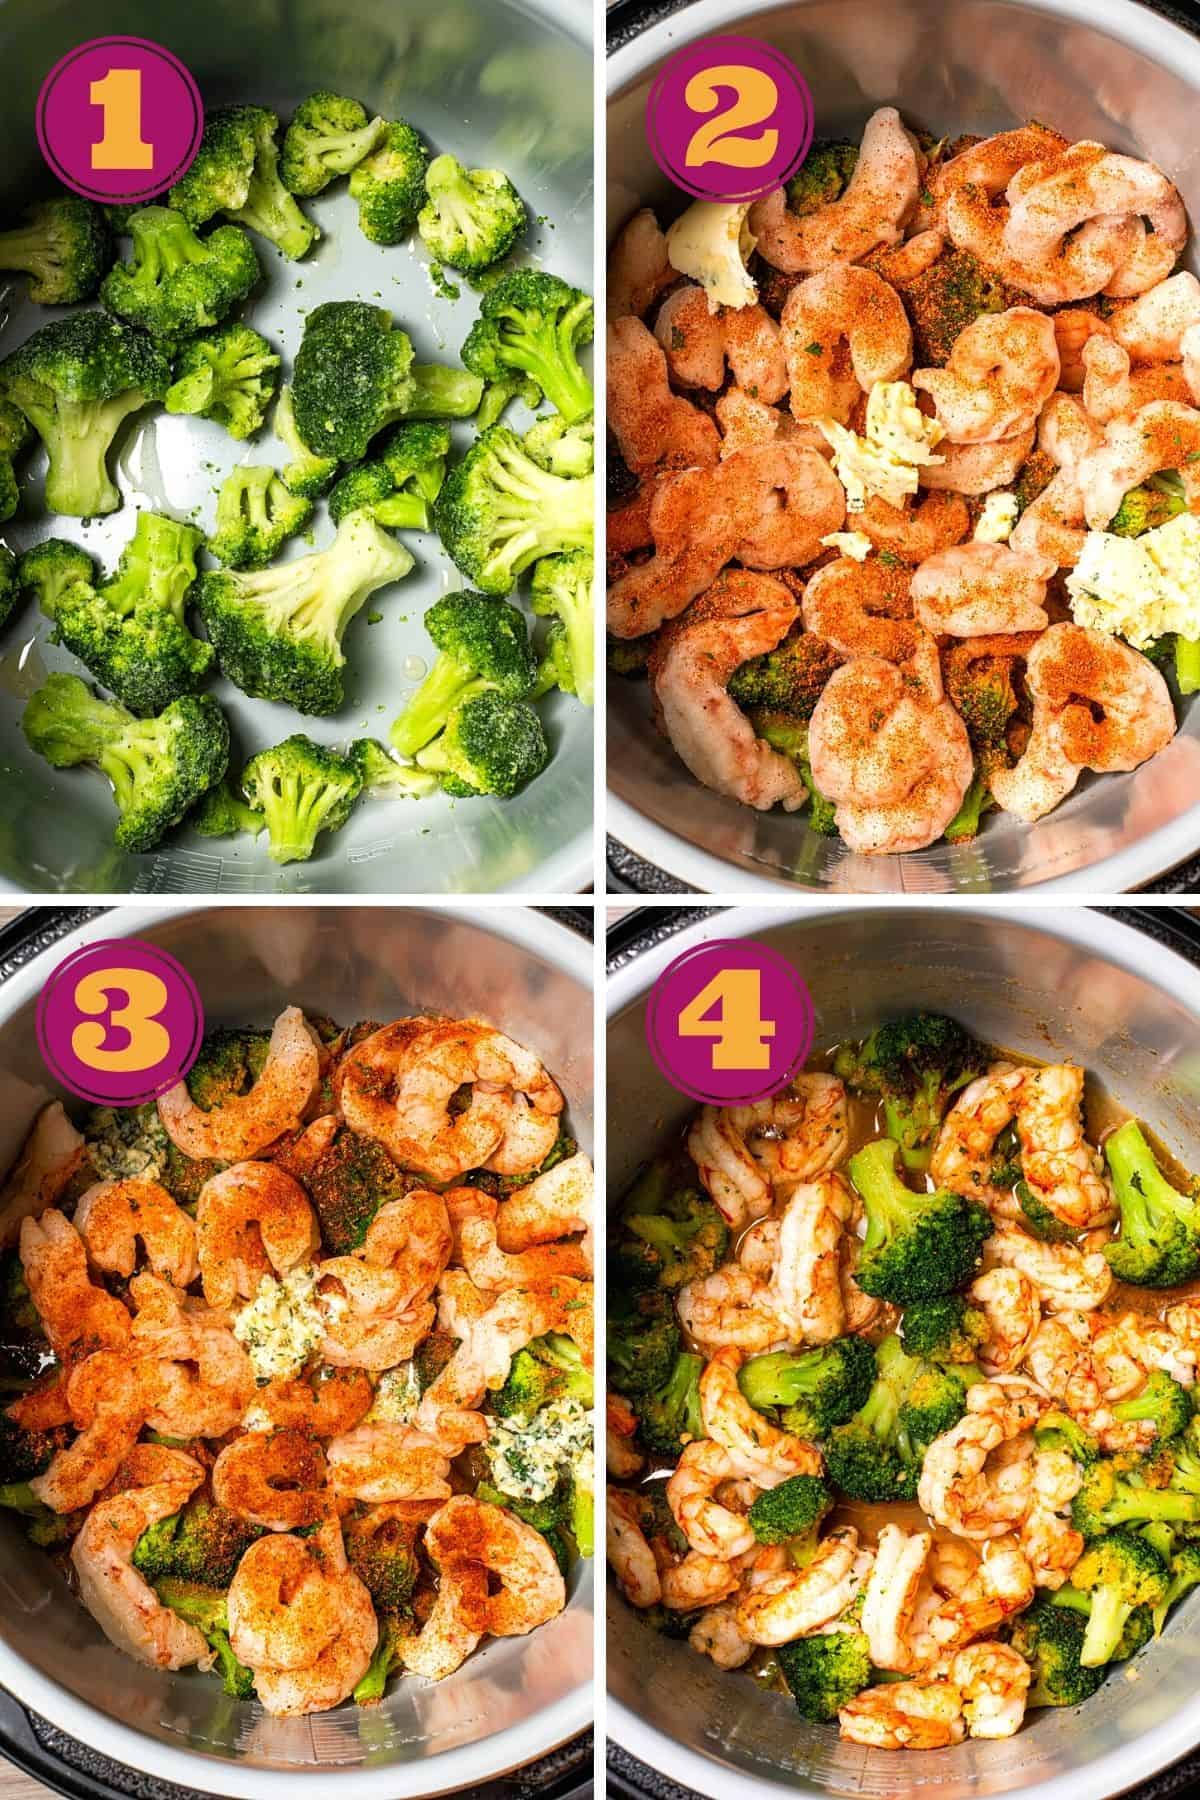 steps to make delicious Air Fryer Frozen Cajun Shrimp & Broccoli dish in the Ninja Foodi